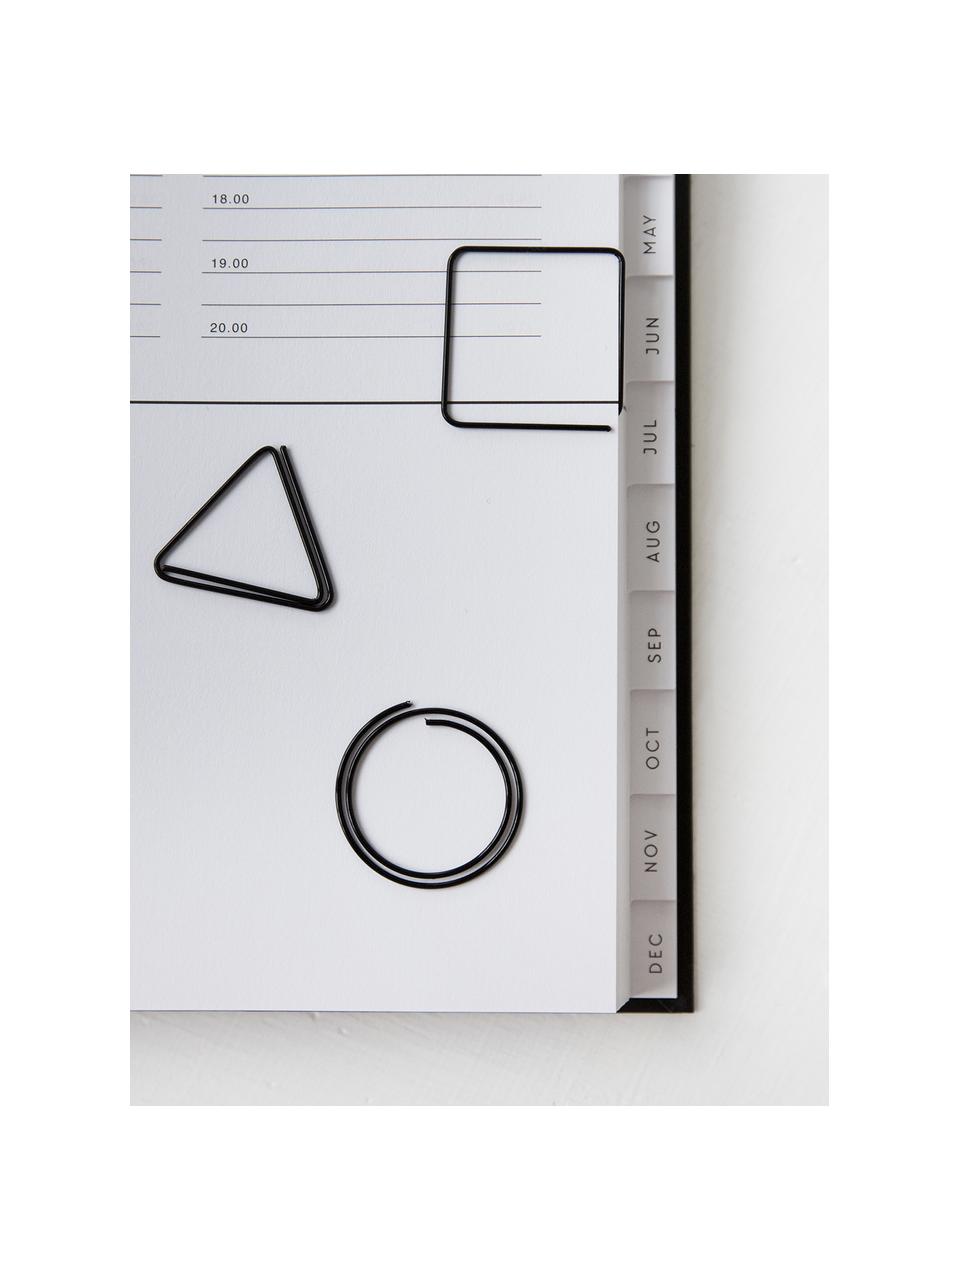 Büroklammern-Set Geometria, 9-tlg., Metall, lackiert, Schwarz, 3 x 3 cm